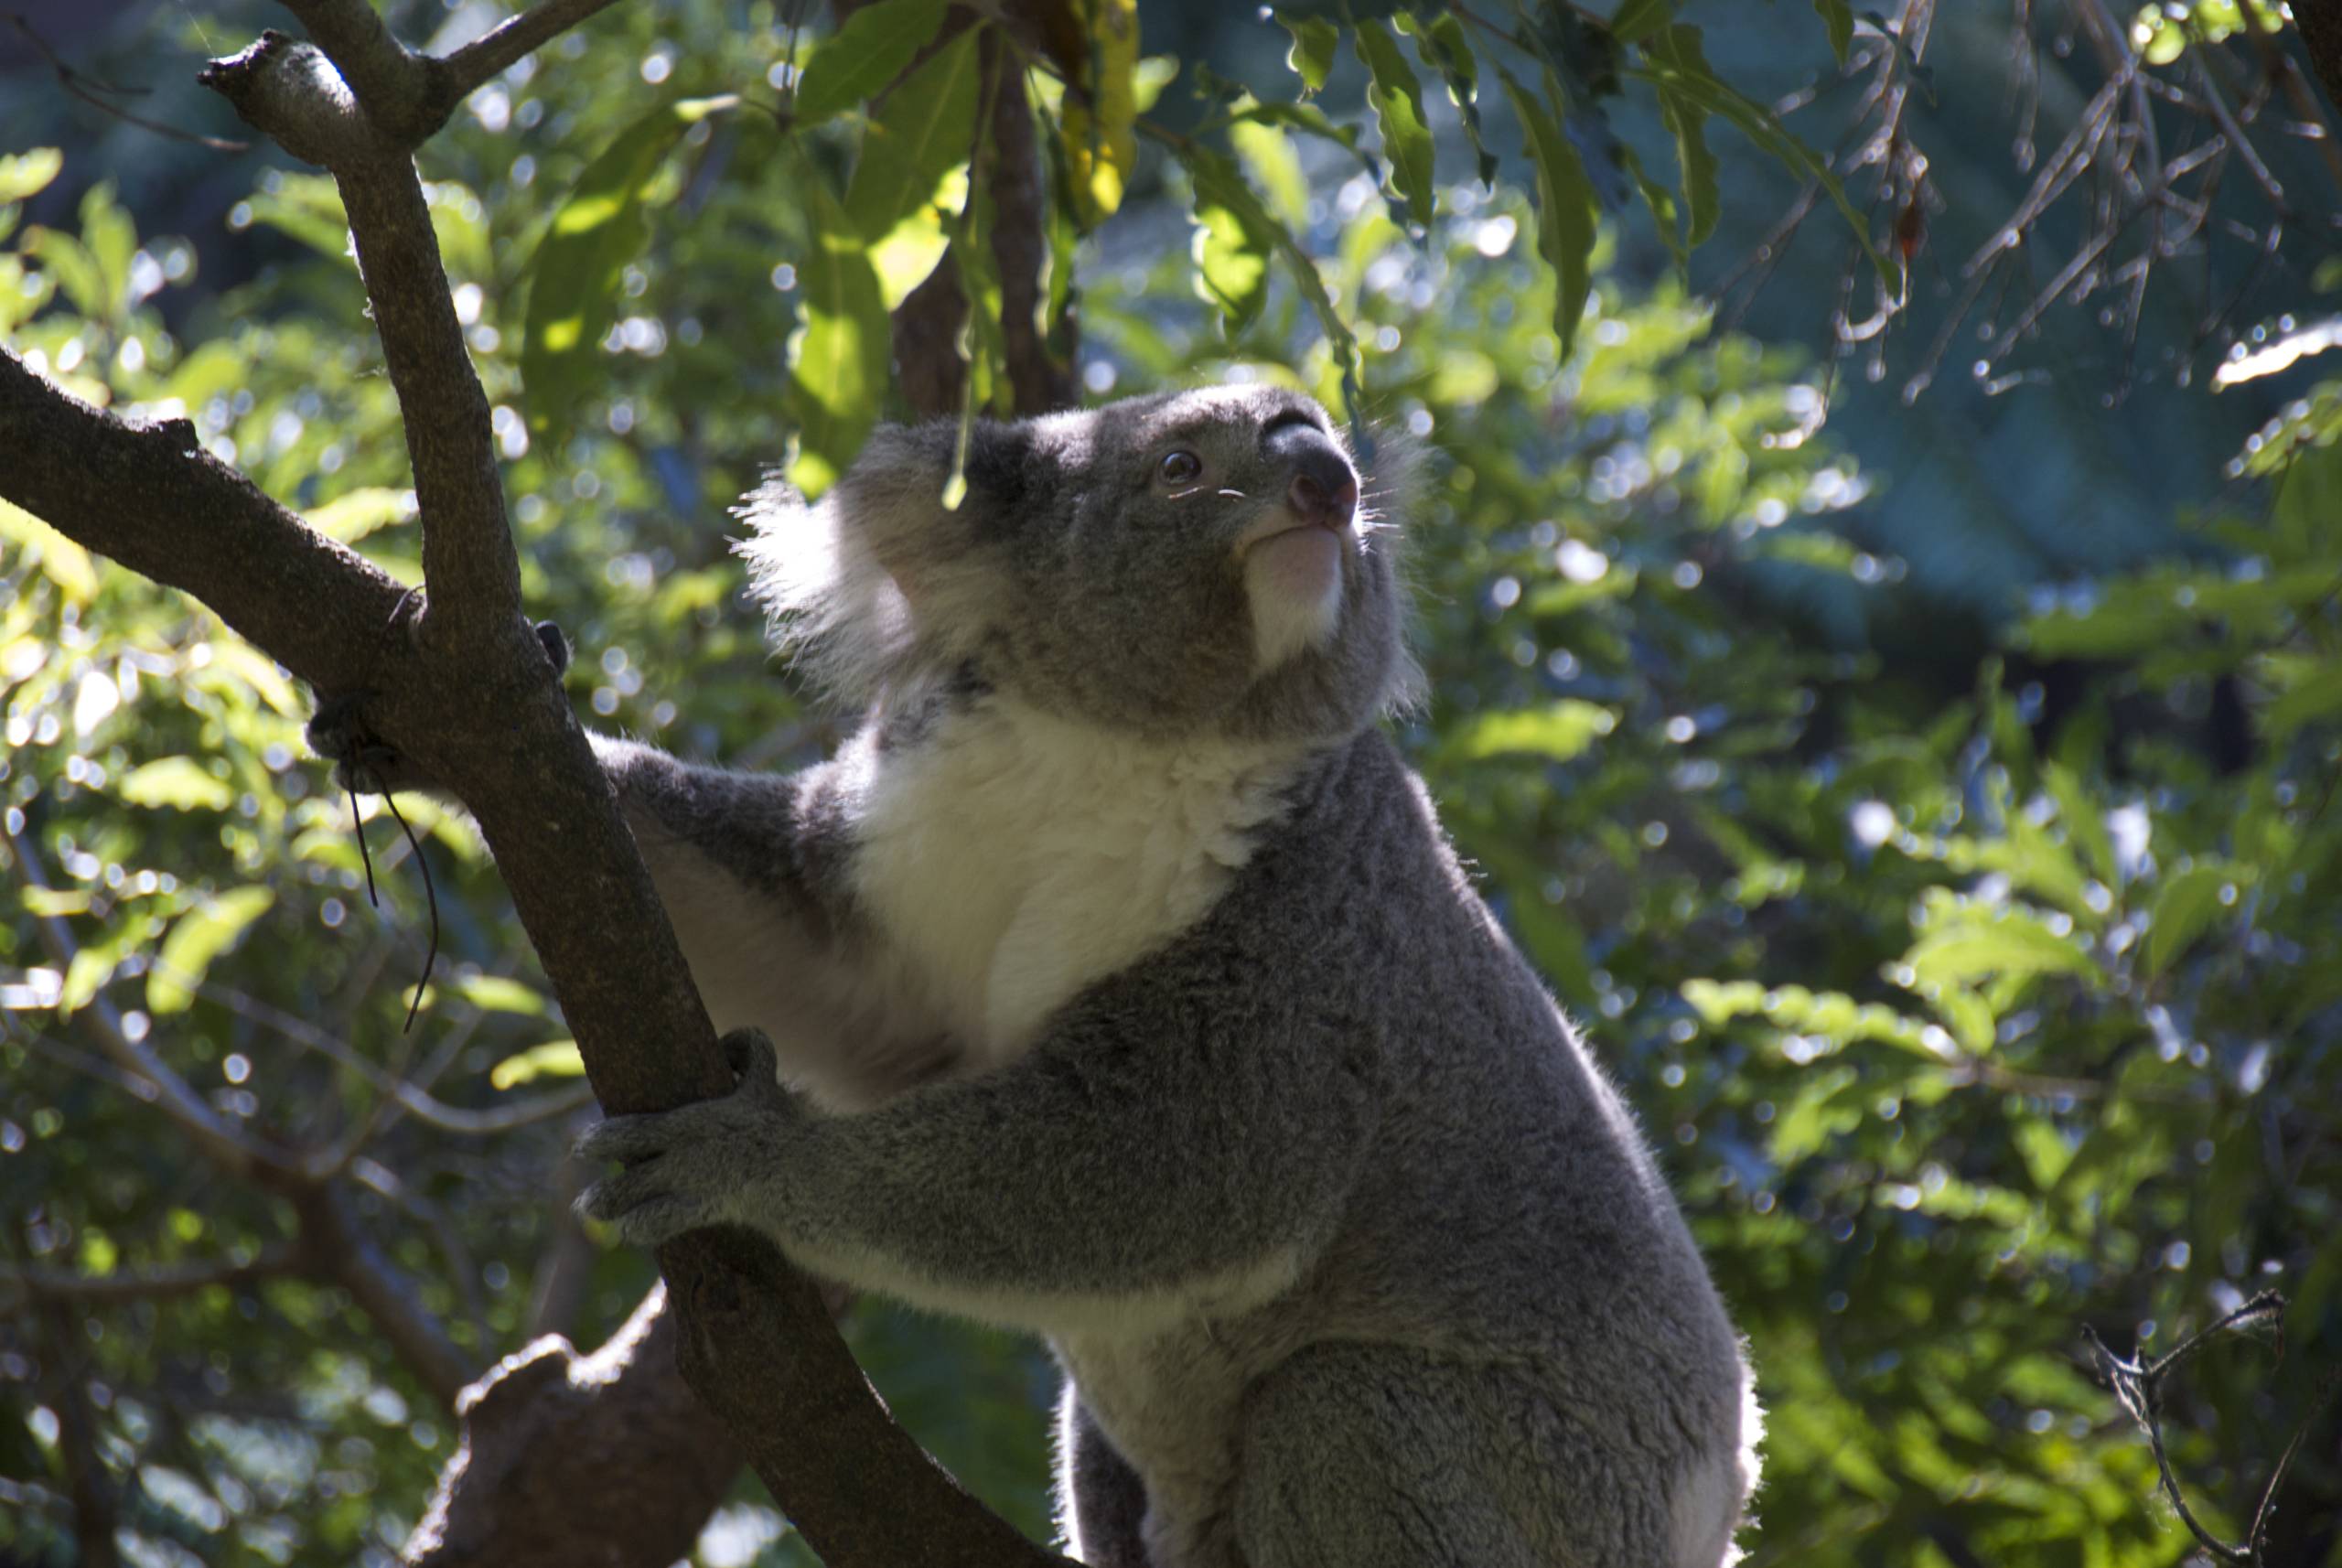 An Australian native, a Koala at the zoo